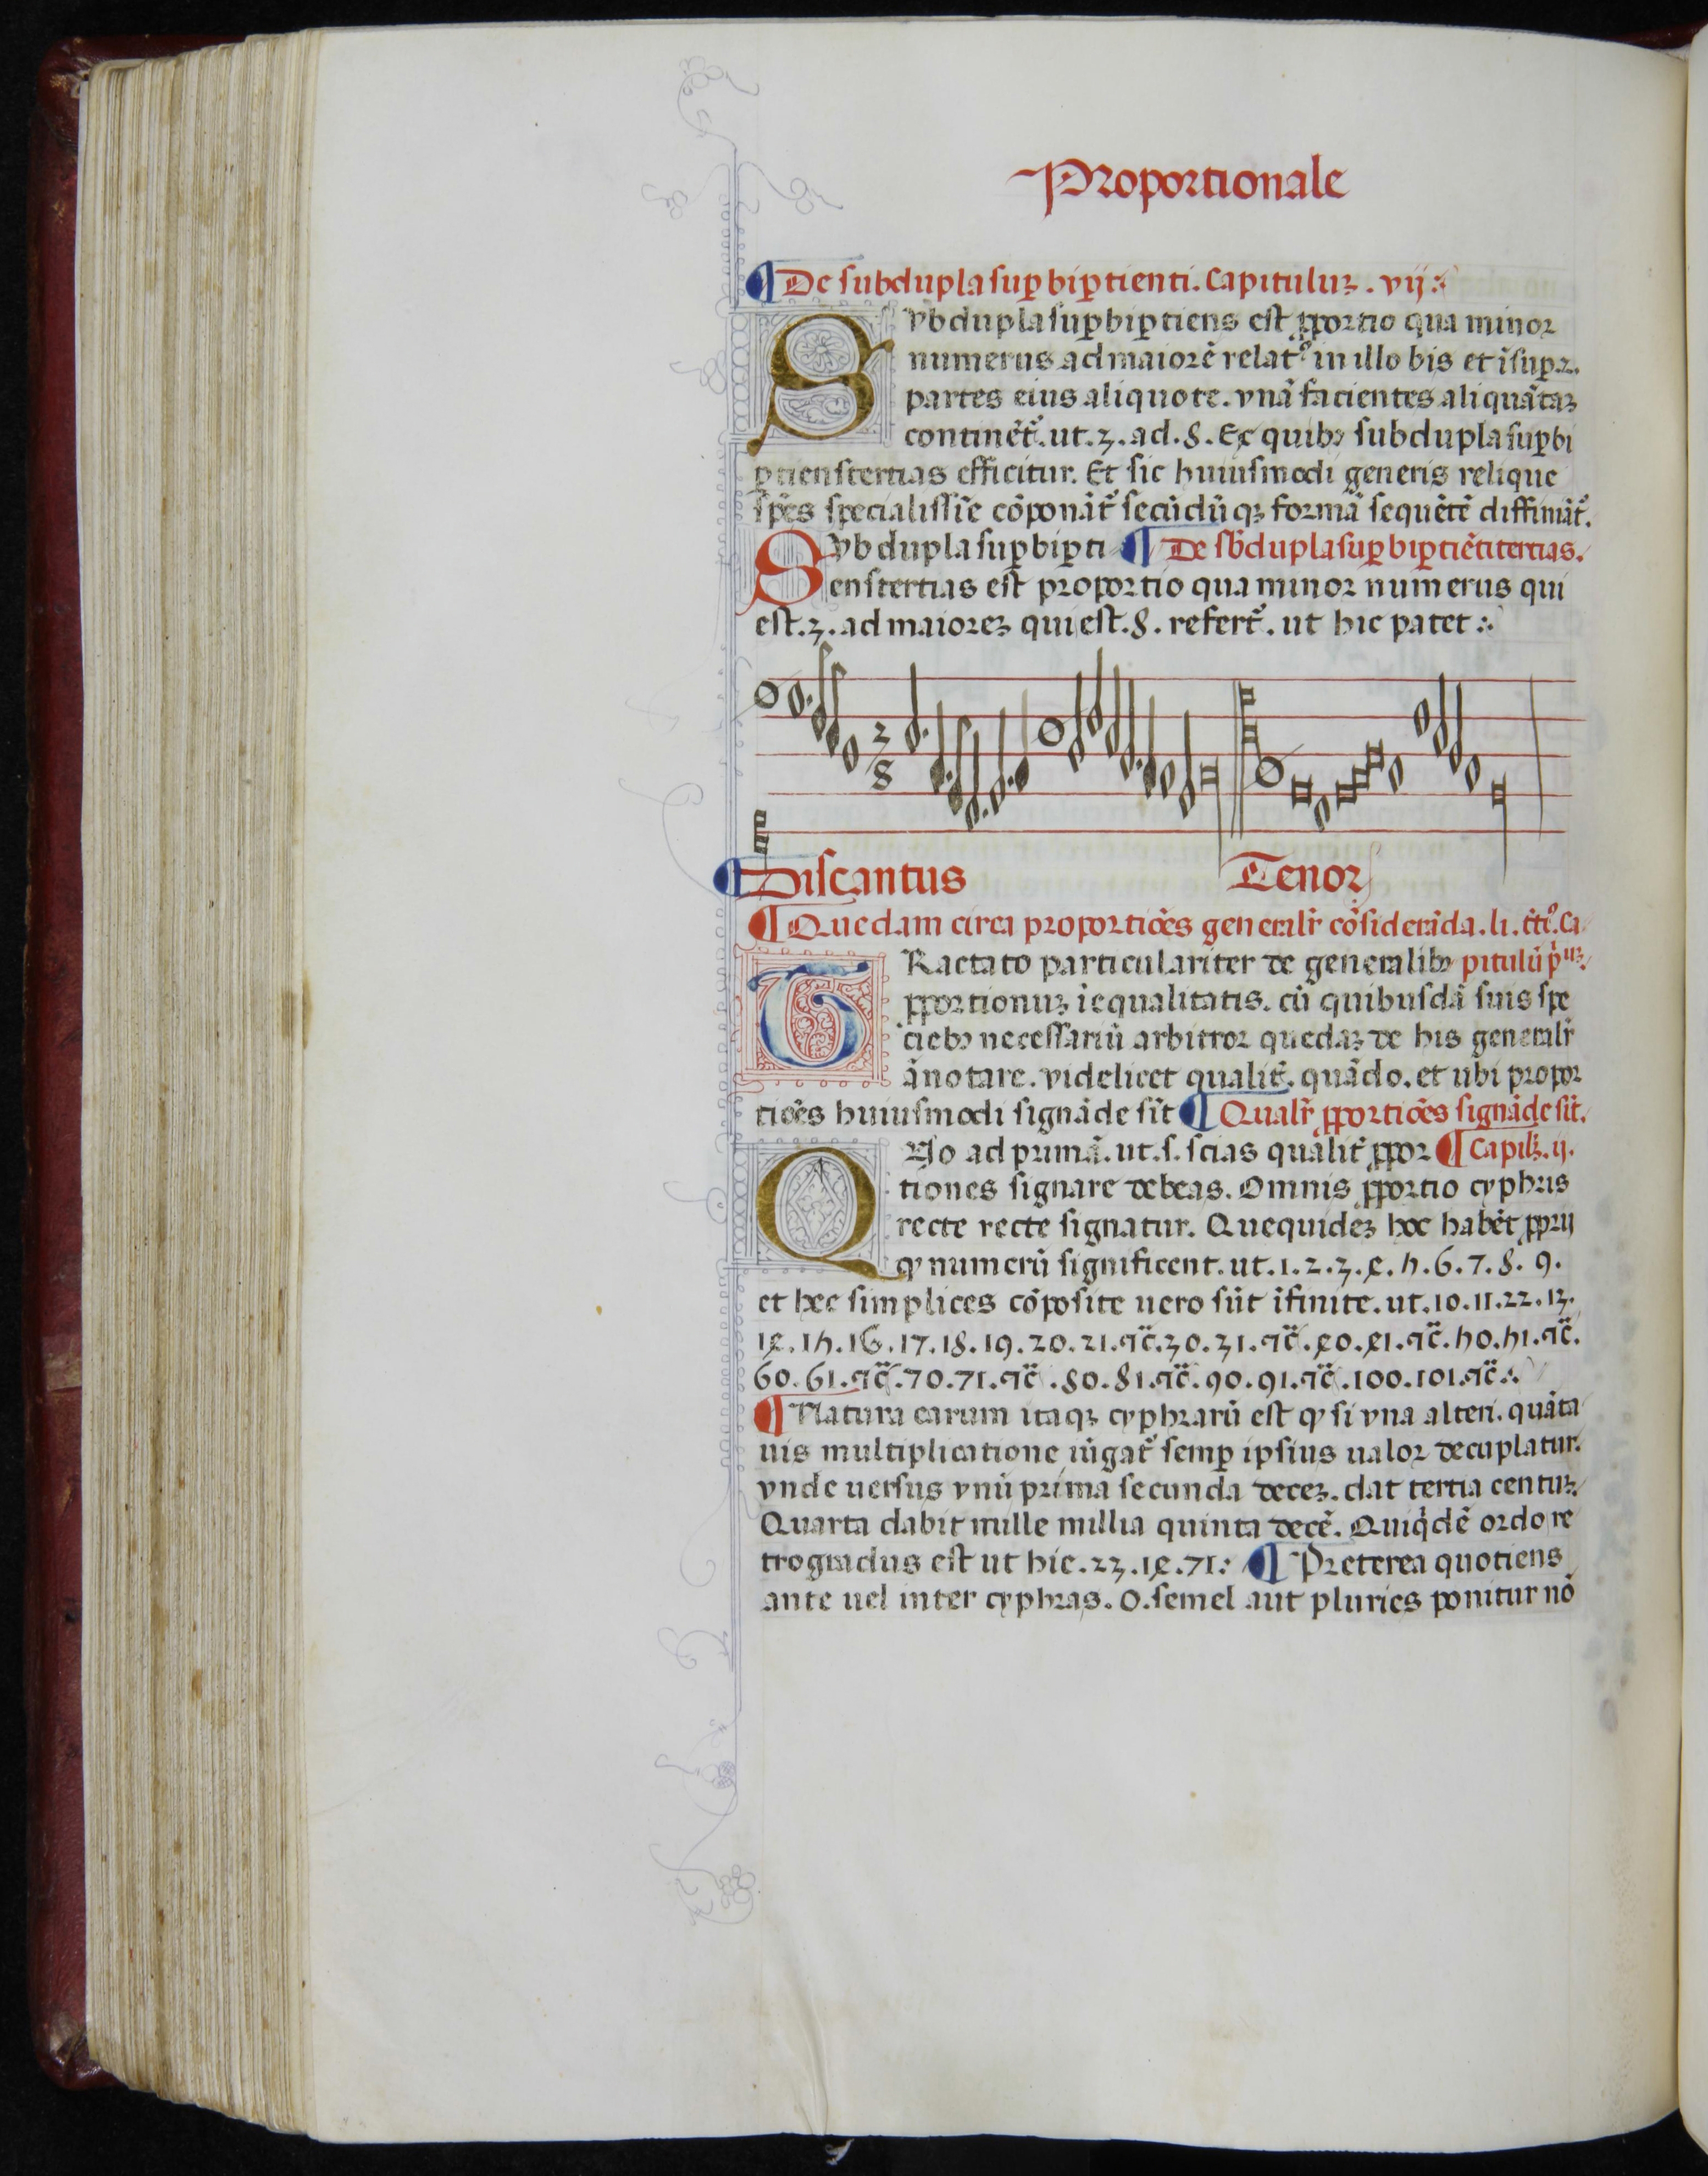 Universitat de València, Biblioteca Històrica, MS 835 [olim 844], fol. 157v. Source: Universitat de València, Biblioteca Històrica.